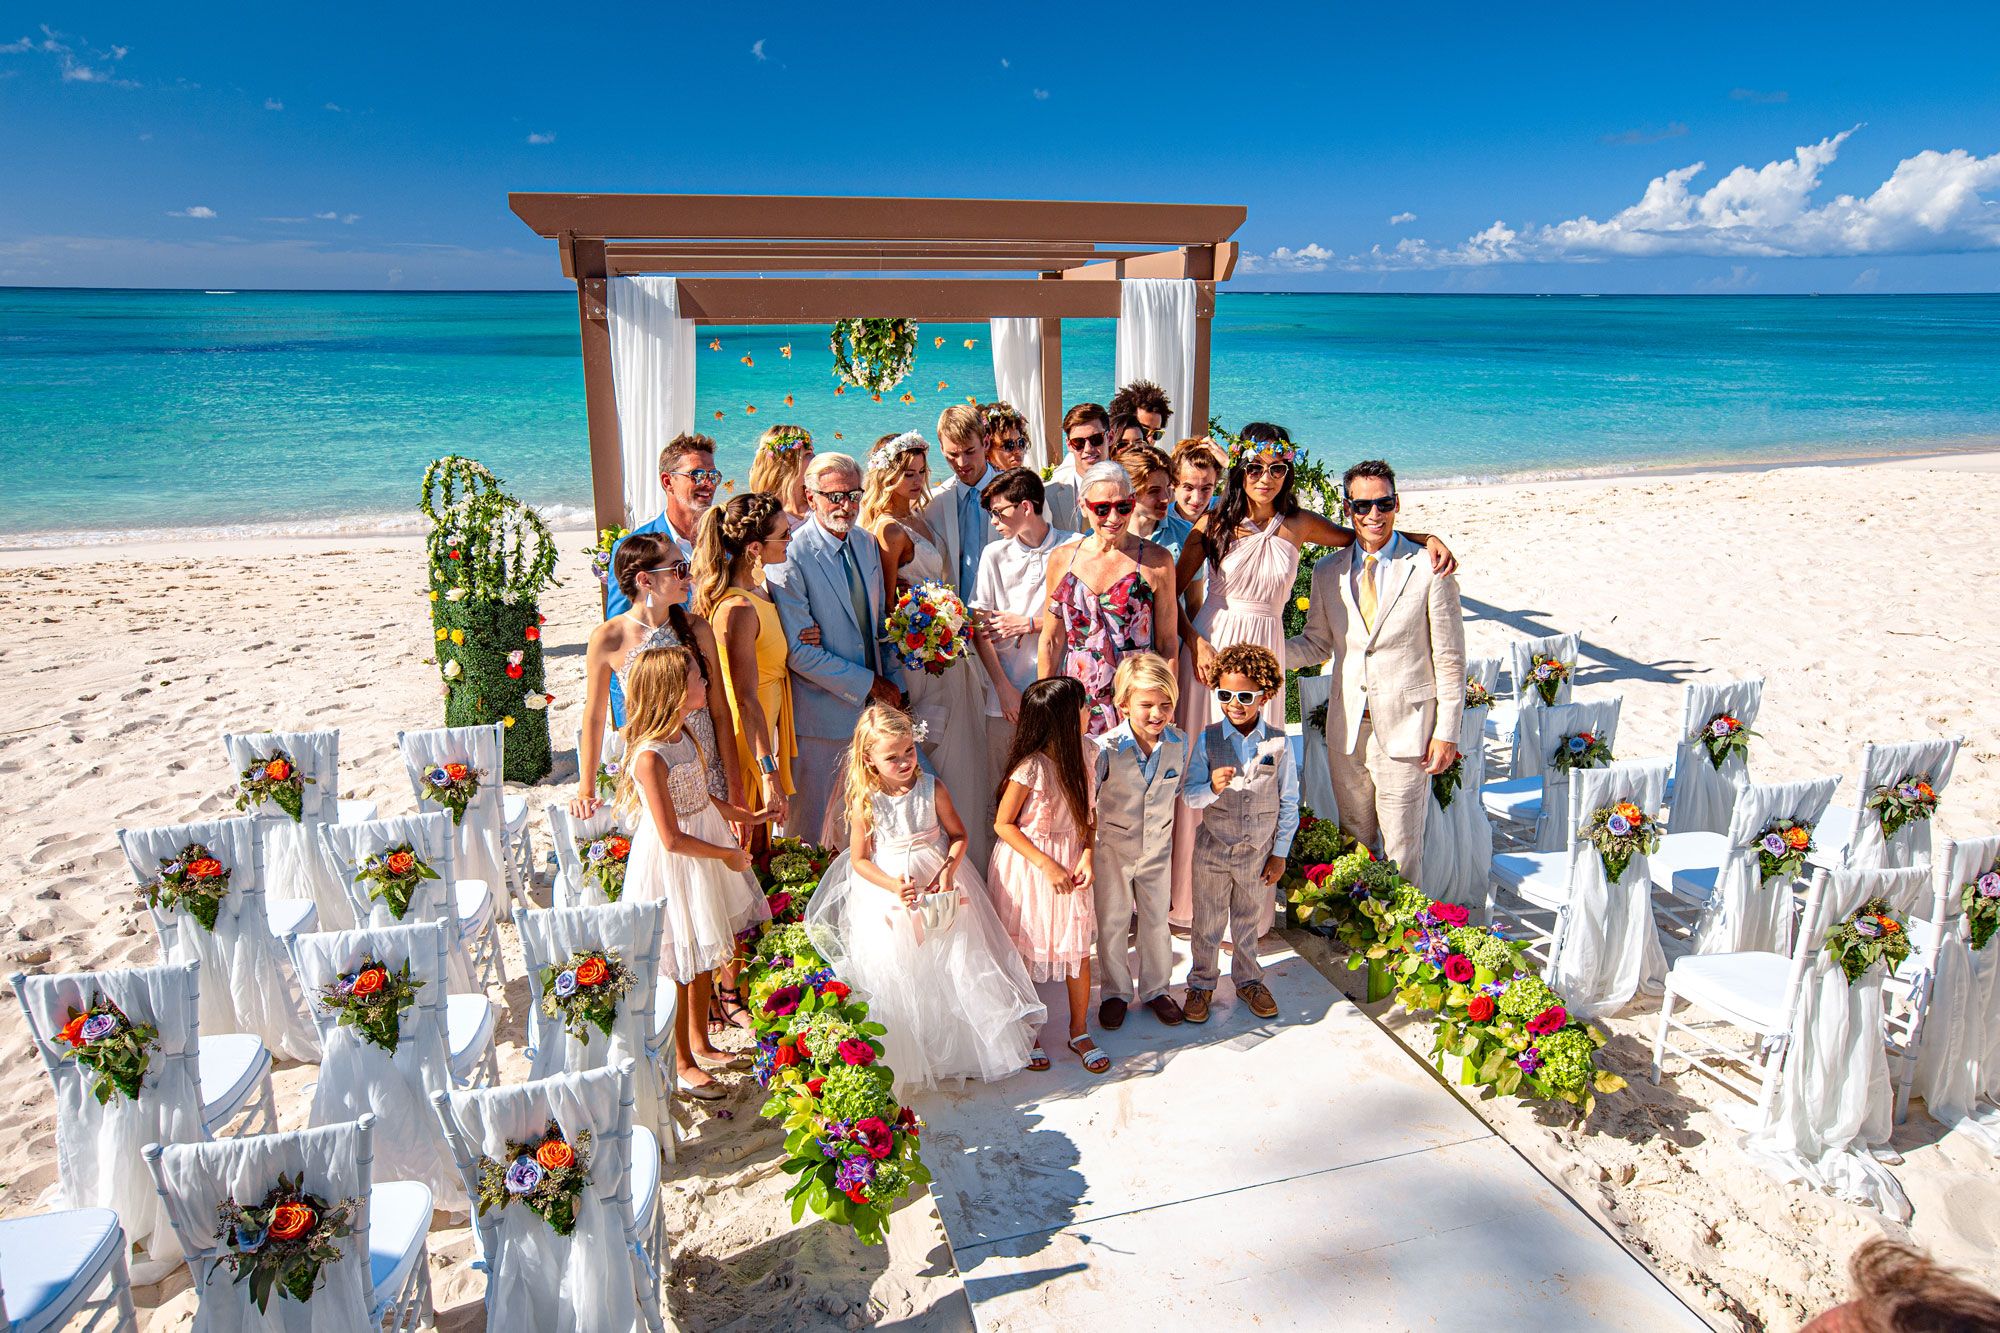 https://www.beaches.com/blog/content/images/2019/11/Beaches-Turks-Caicos-Beach-Wedding8.jpg